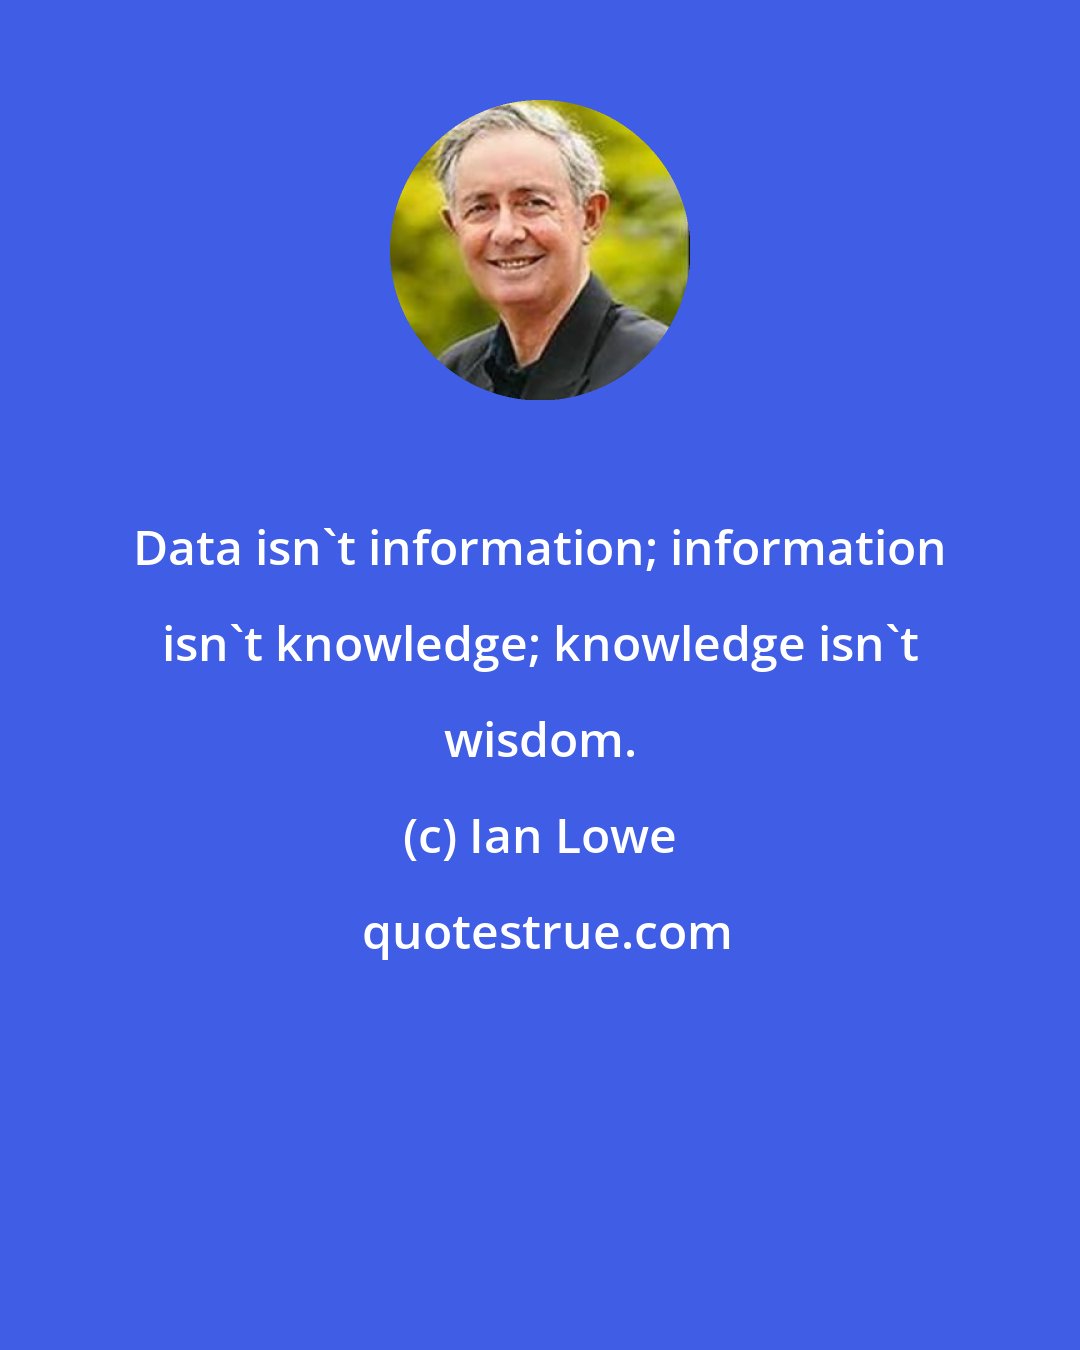 Ian Lowe: Data isn't information; information isn't knowledge; knowledge isn't wisdom.